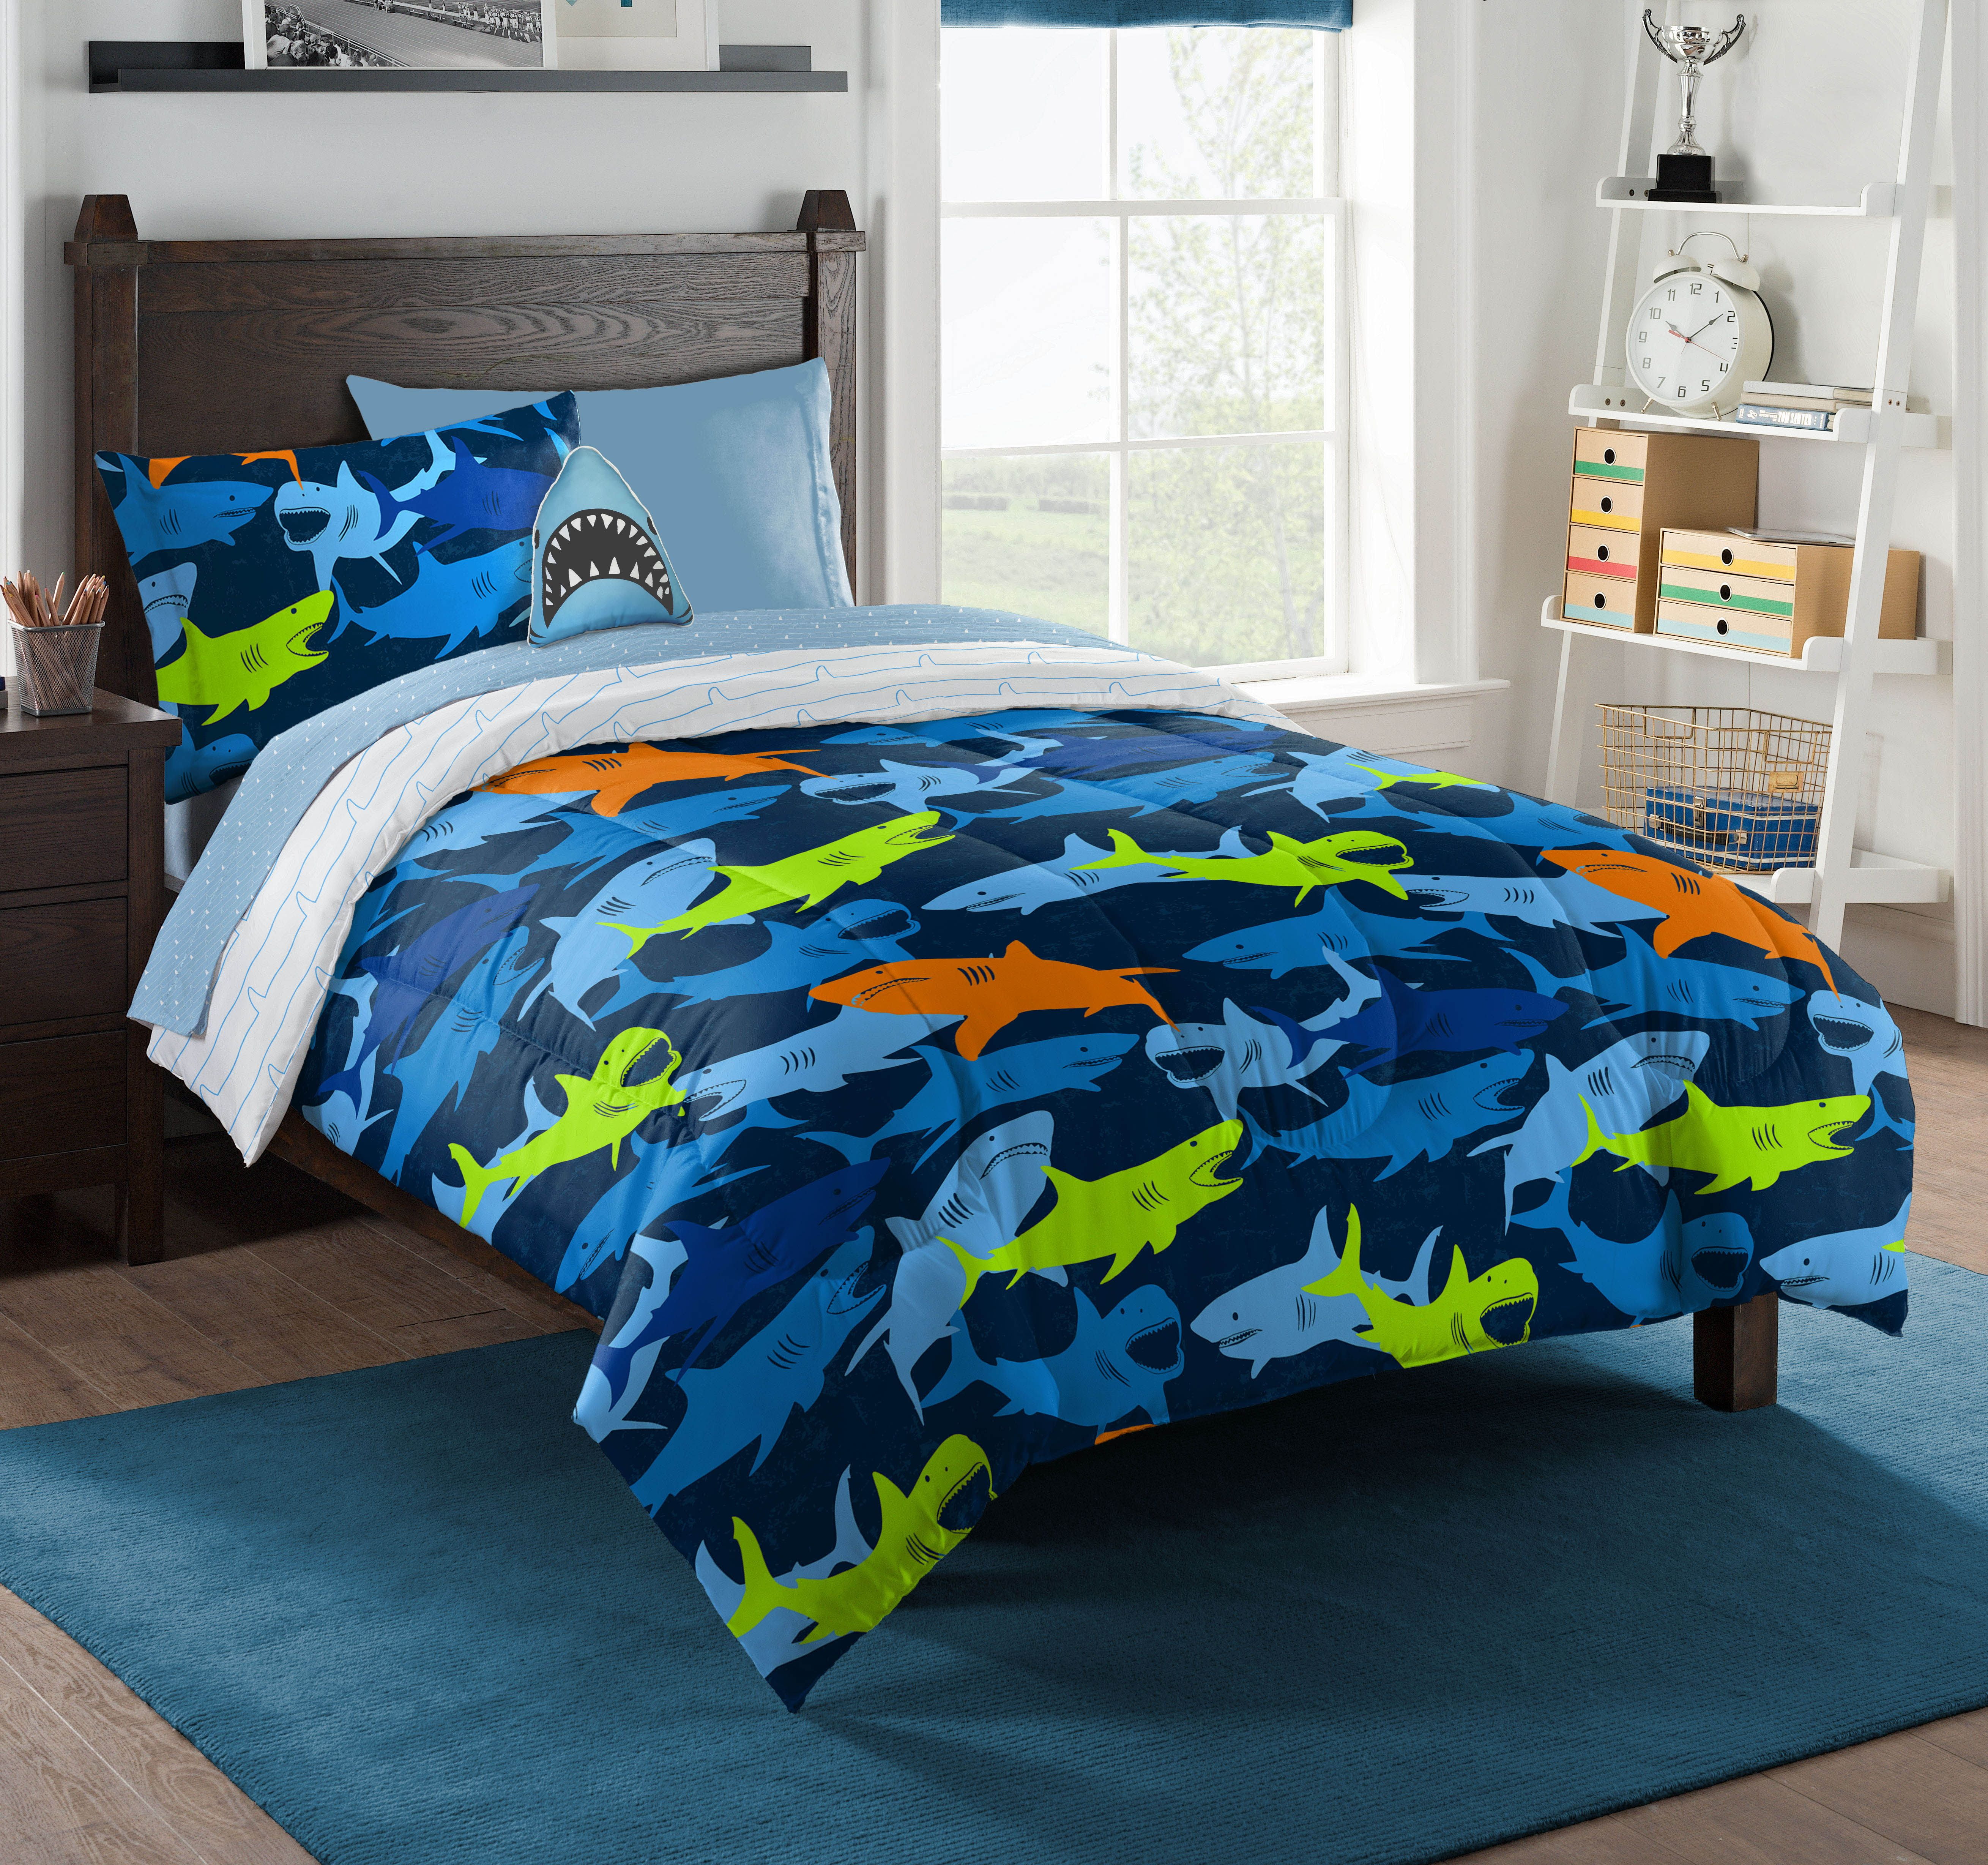 Ocean Blue Shark Kids/Teens Bed In a Bag COMFORTER Friendly Plush Toy Sheet Set 